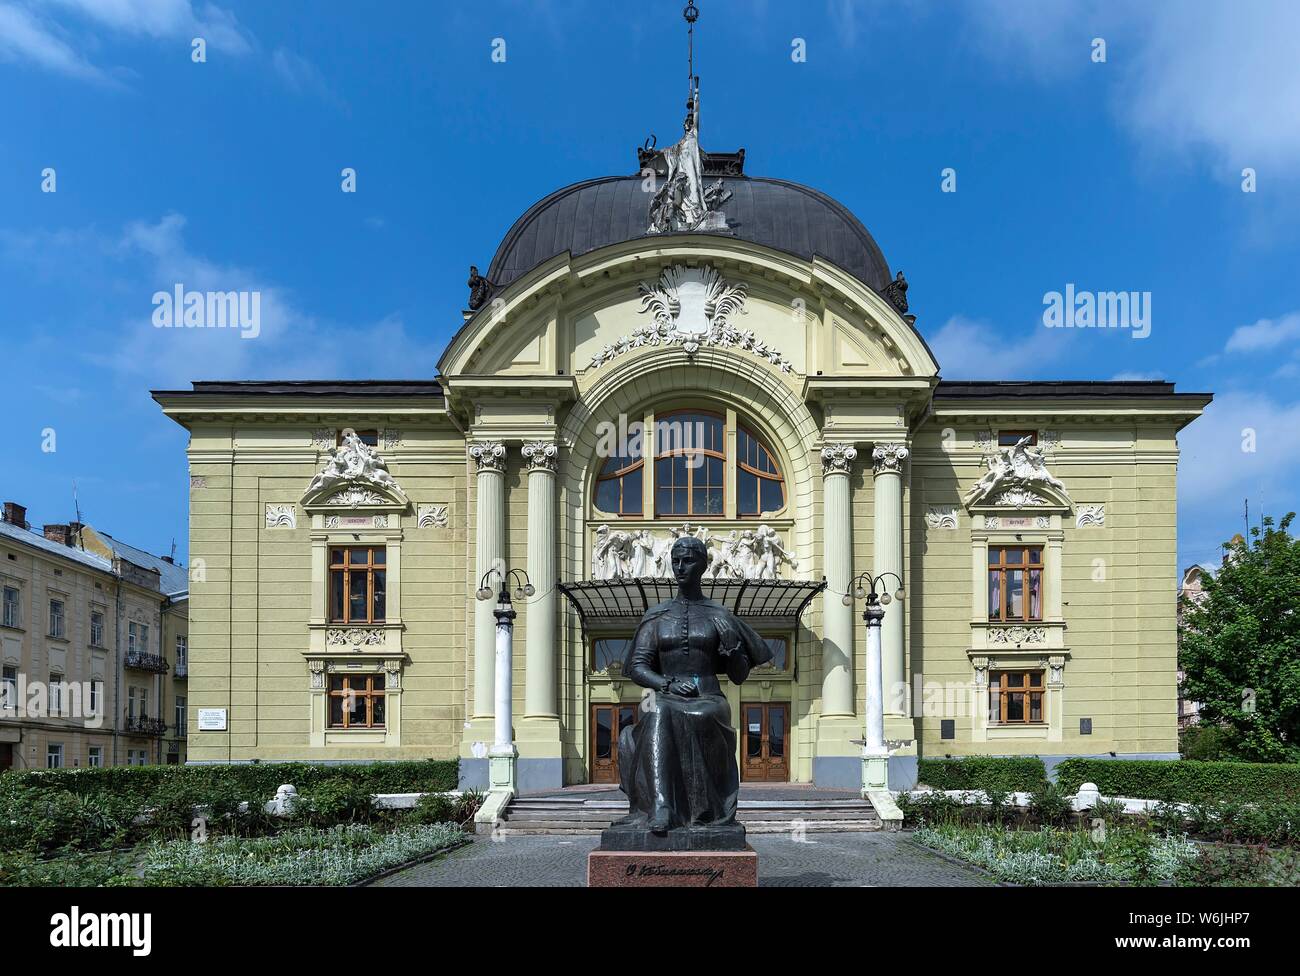 Olha-Kobylianska Theater, in front a statue of the Ukrainian national poet Olga Kobyljanska, Czernowicz, Bukowina, Ukraine Stock Photo